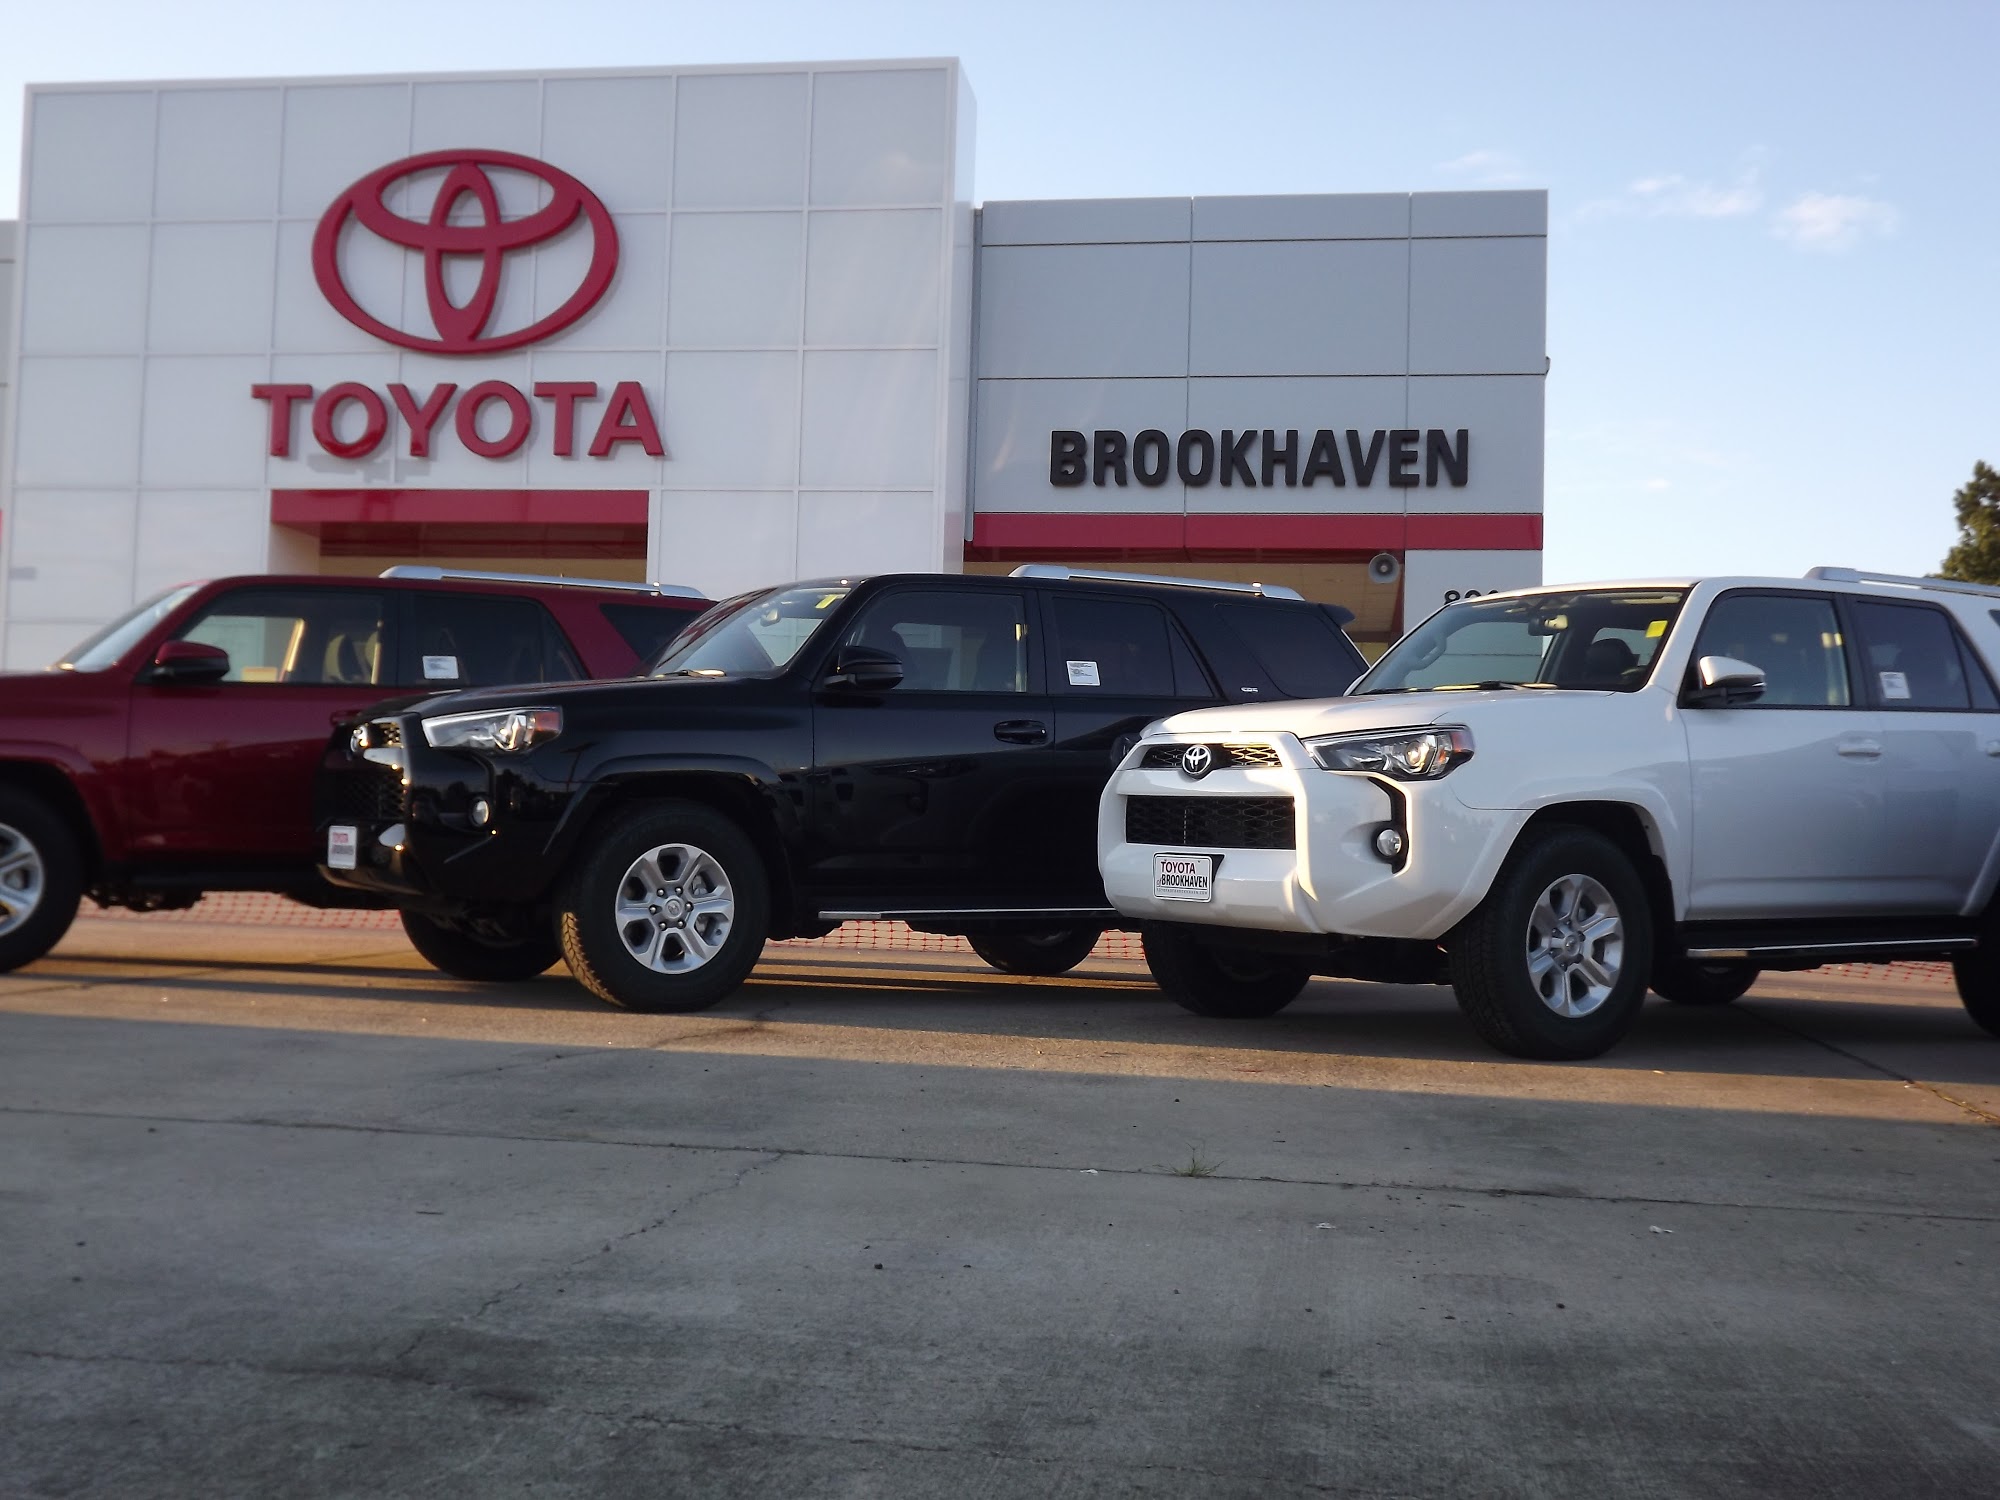 Toyota of Brookhaven